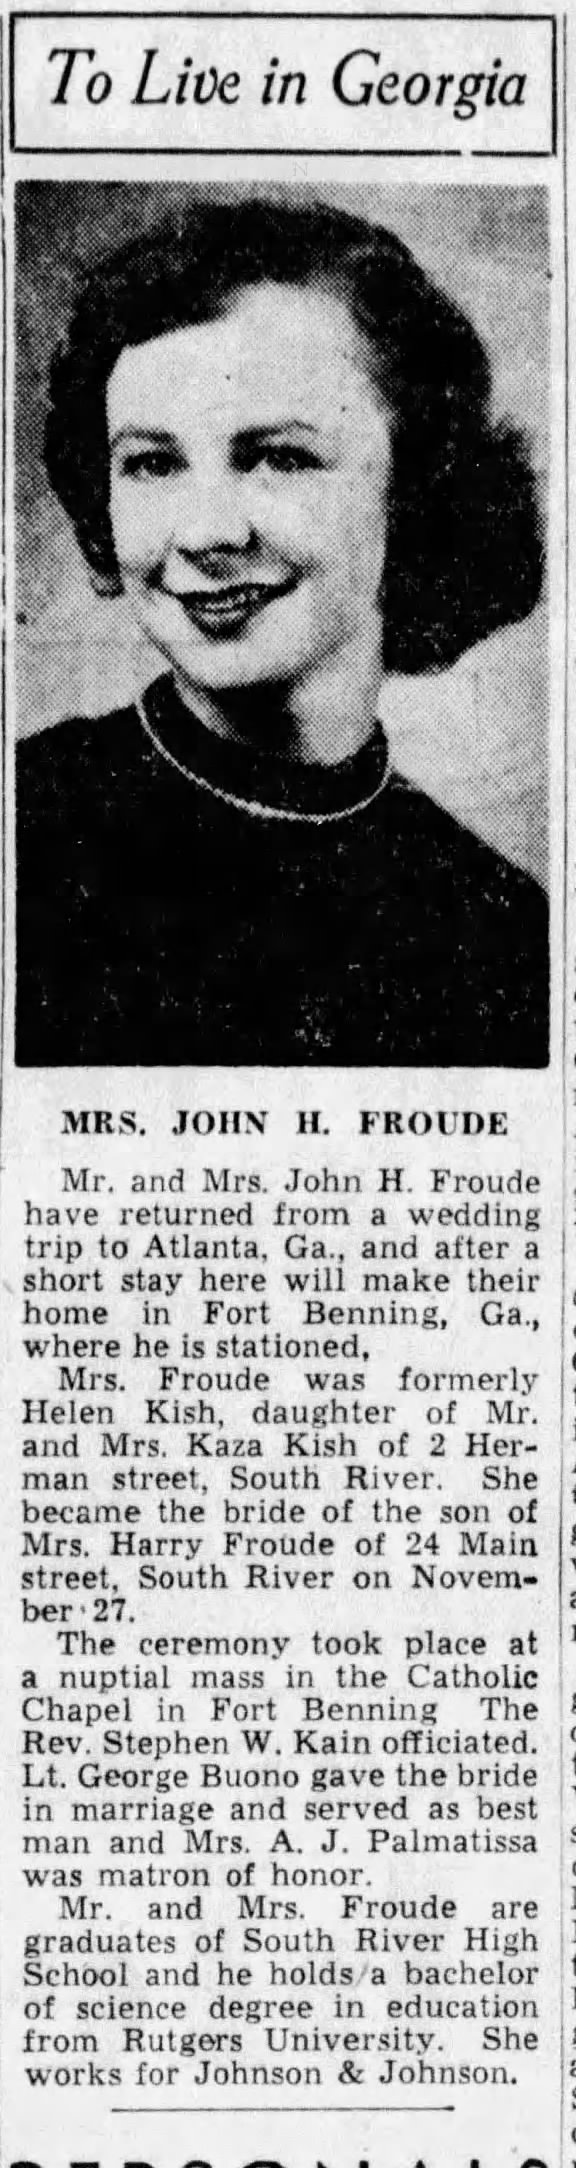 John H. Froude of South River High School